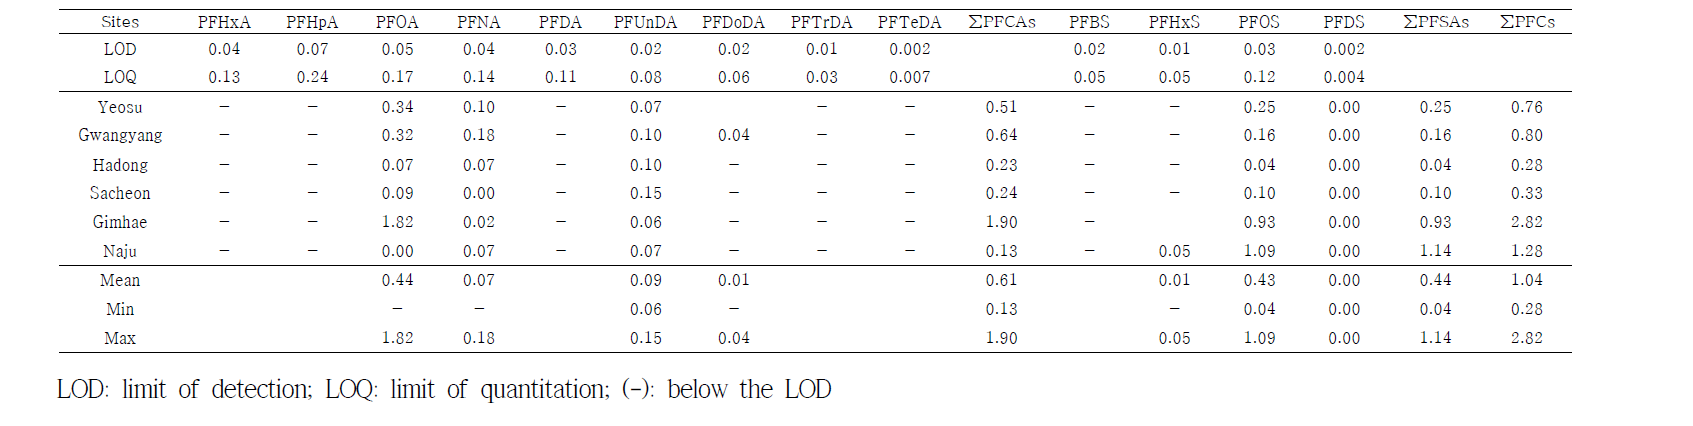 Concentrations of PFCs in sediment of medaka habitat (ng/g wet wt.)